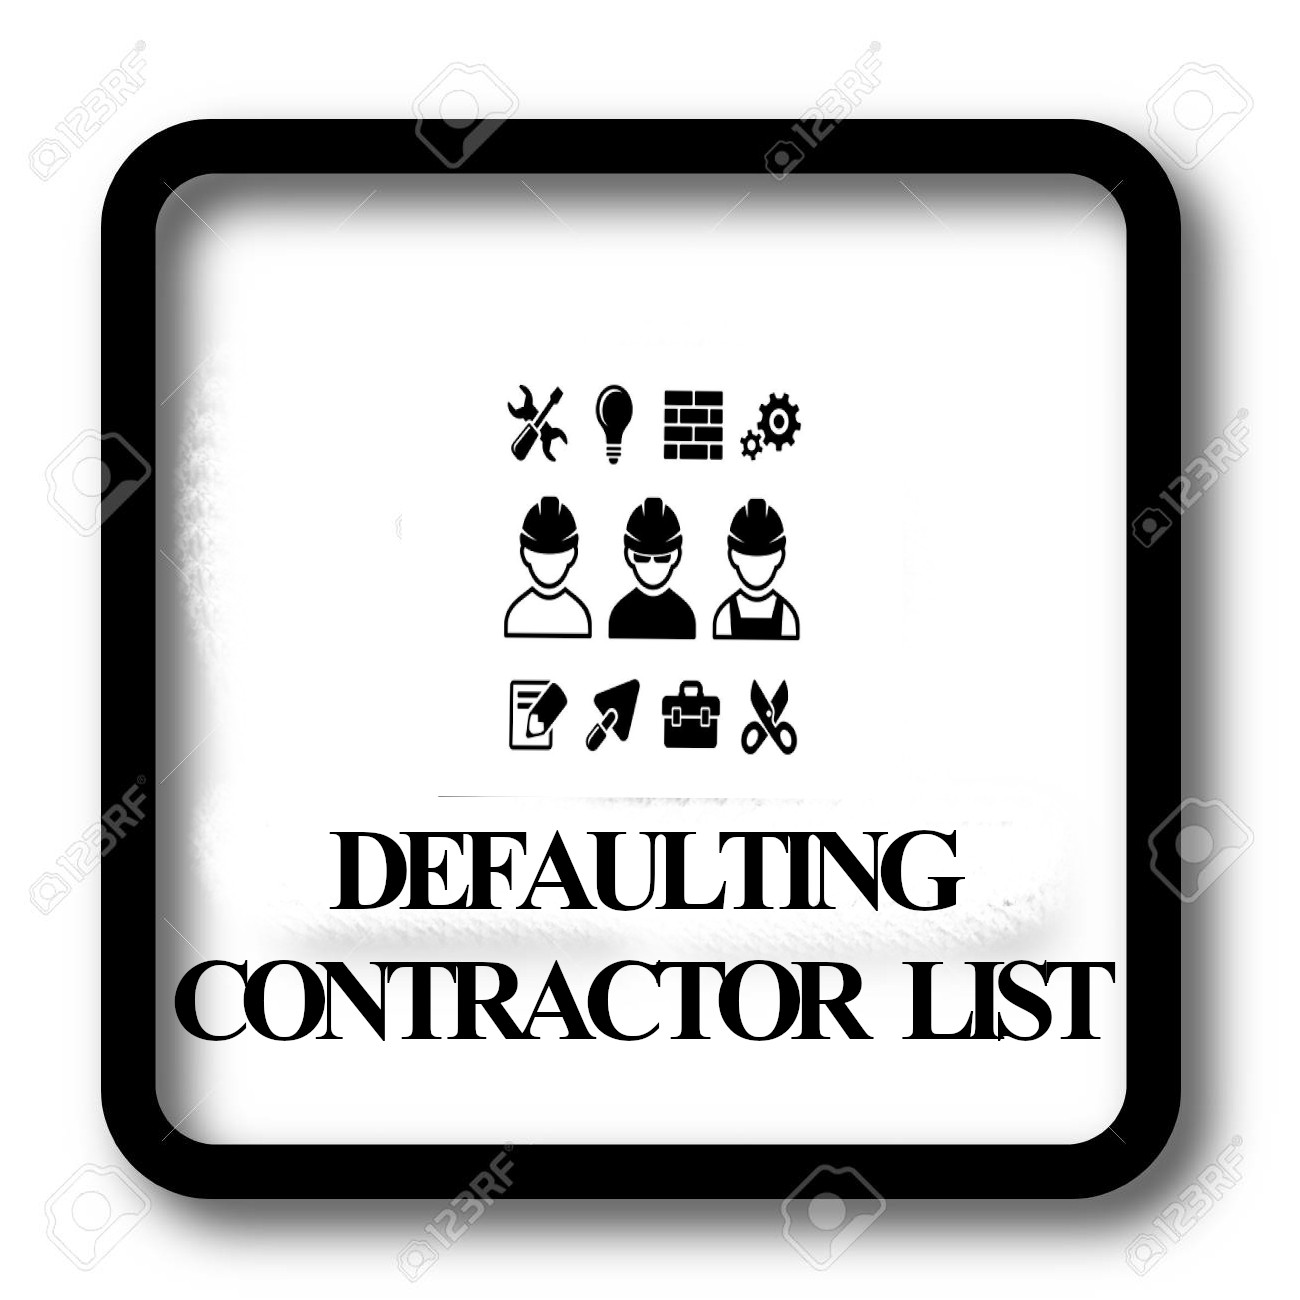 Defaulting_contrator